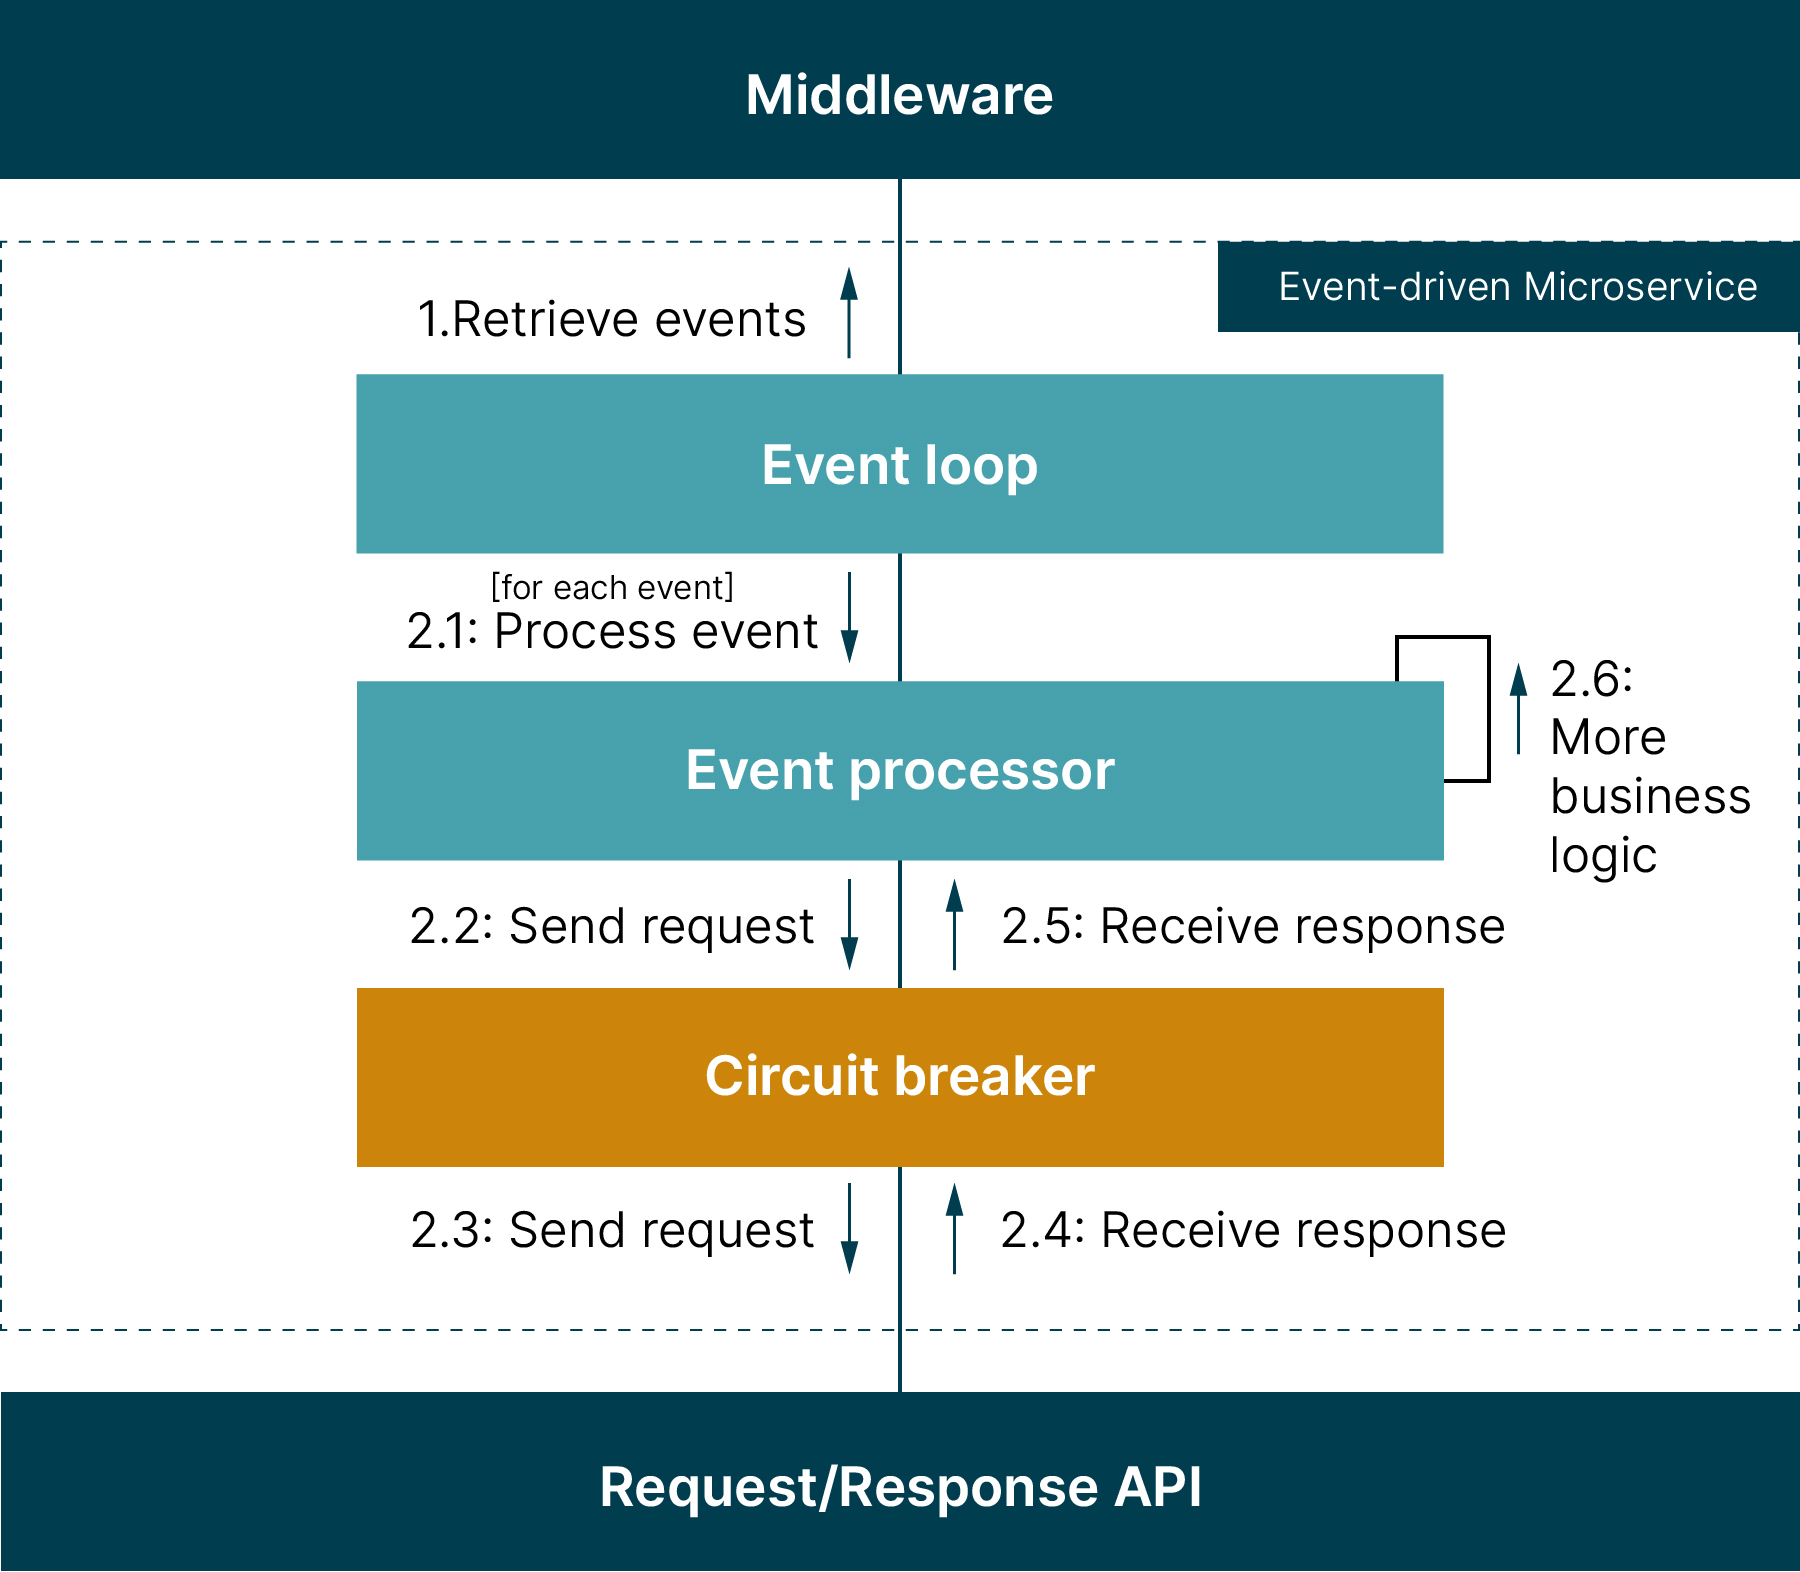 Circuit Breaker Integrated into Event-driven Microservice